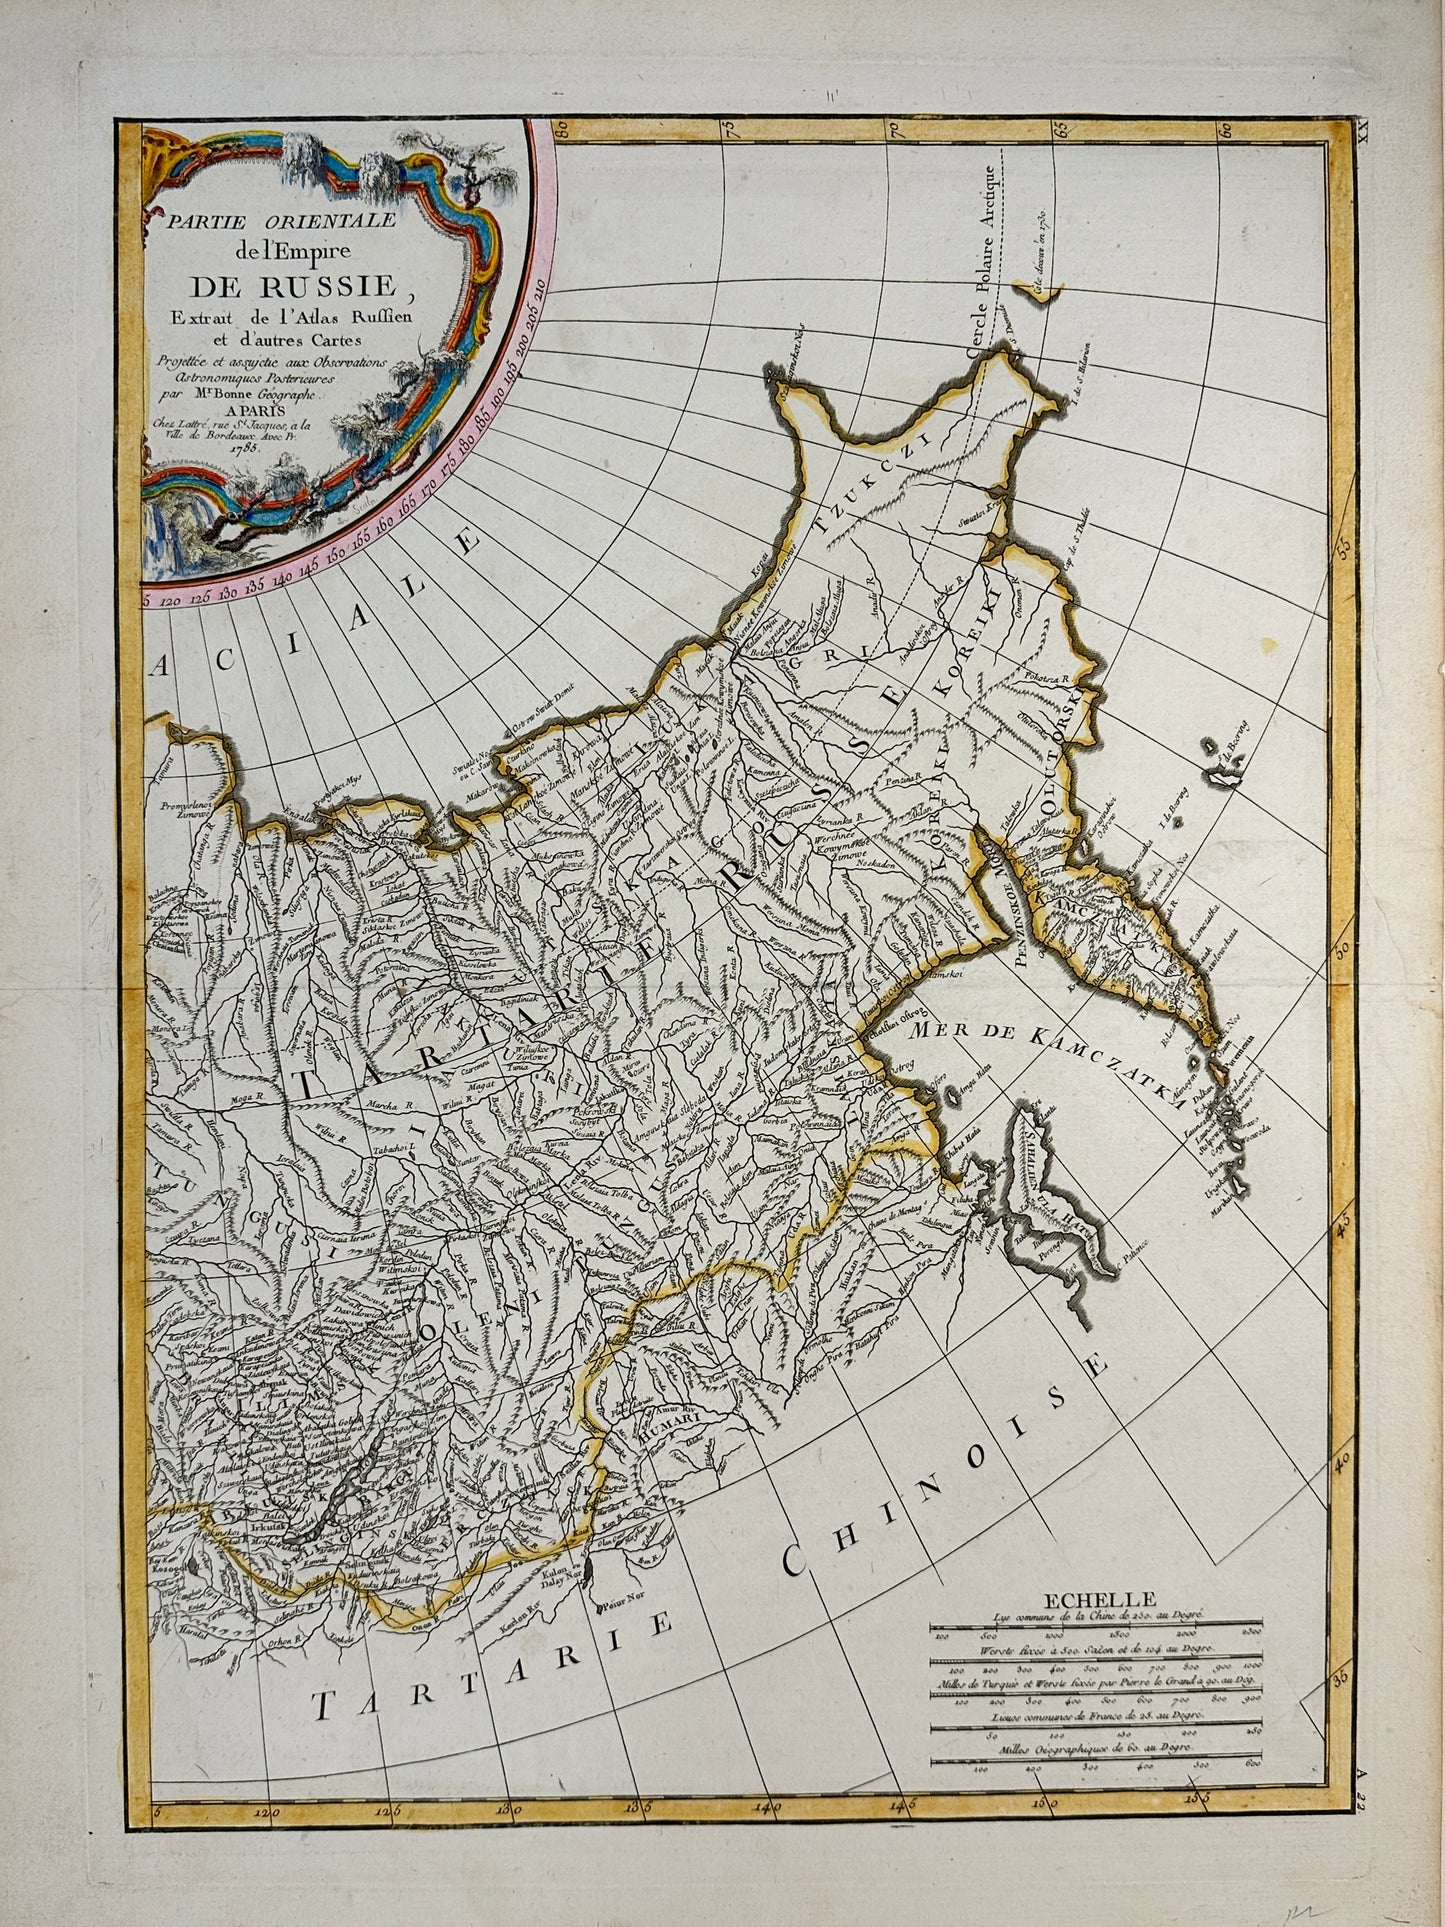 Pair of Maps of Empire Russia by Rigobert Bonne: (1) Partie Occidentale de l'Empire de Russie   (2) Partie Orientale de l'Empire de Russie